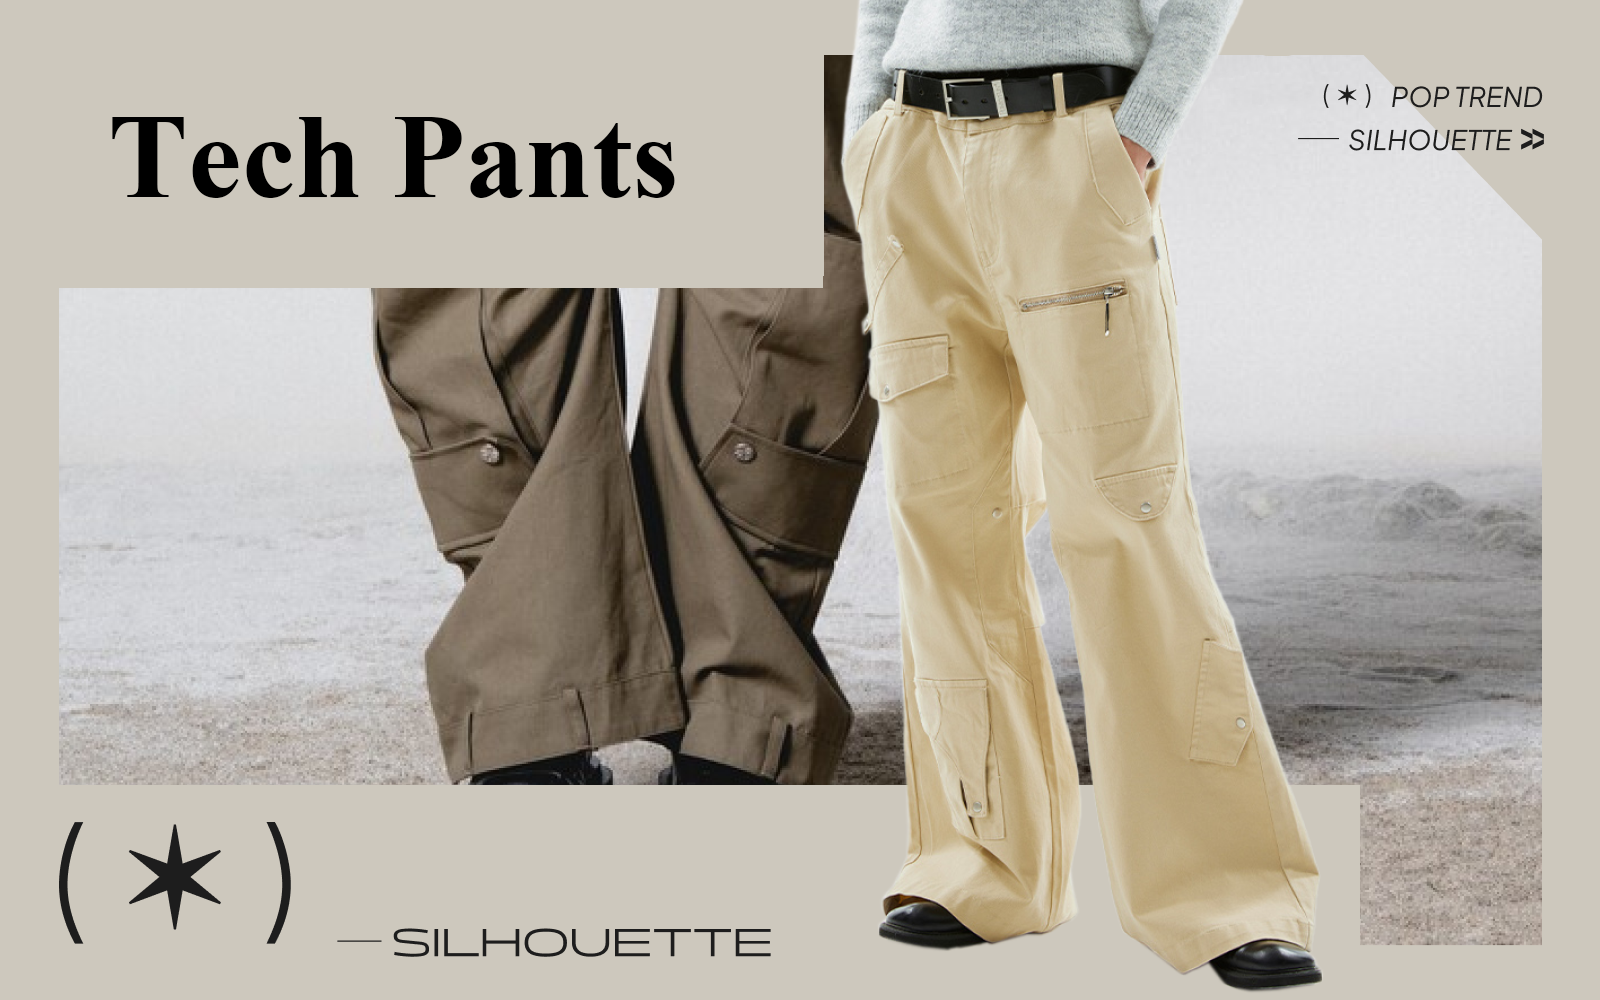 Urban Techwear -- The Silhouette Trend for Men's Pants